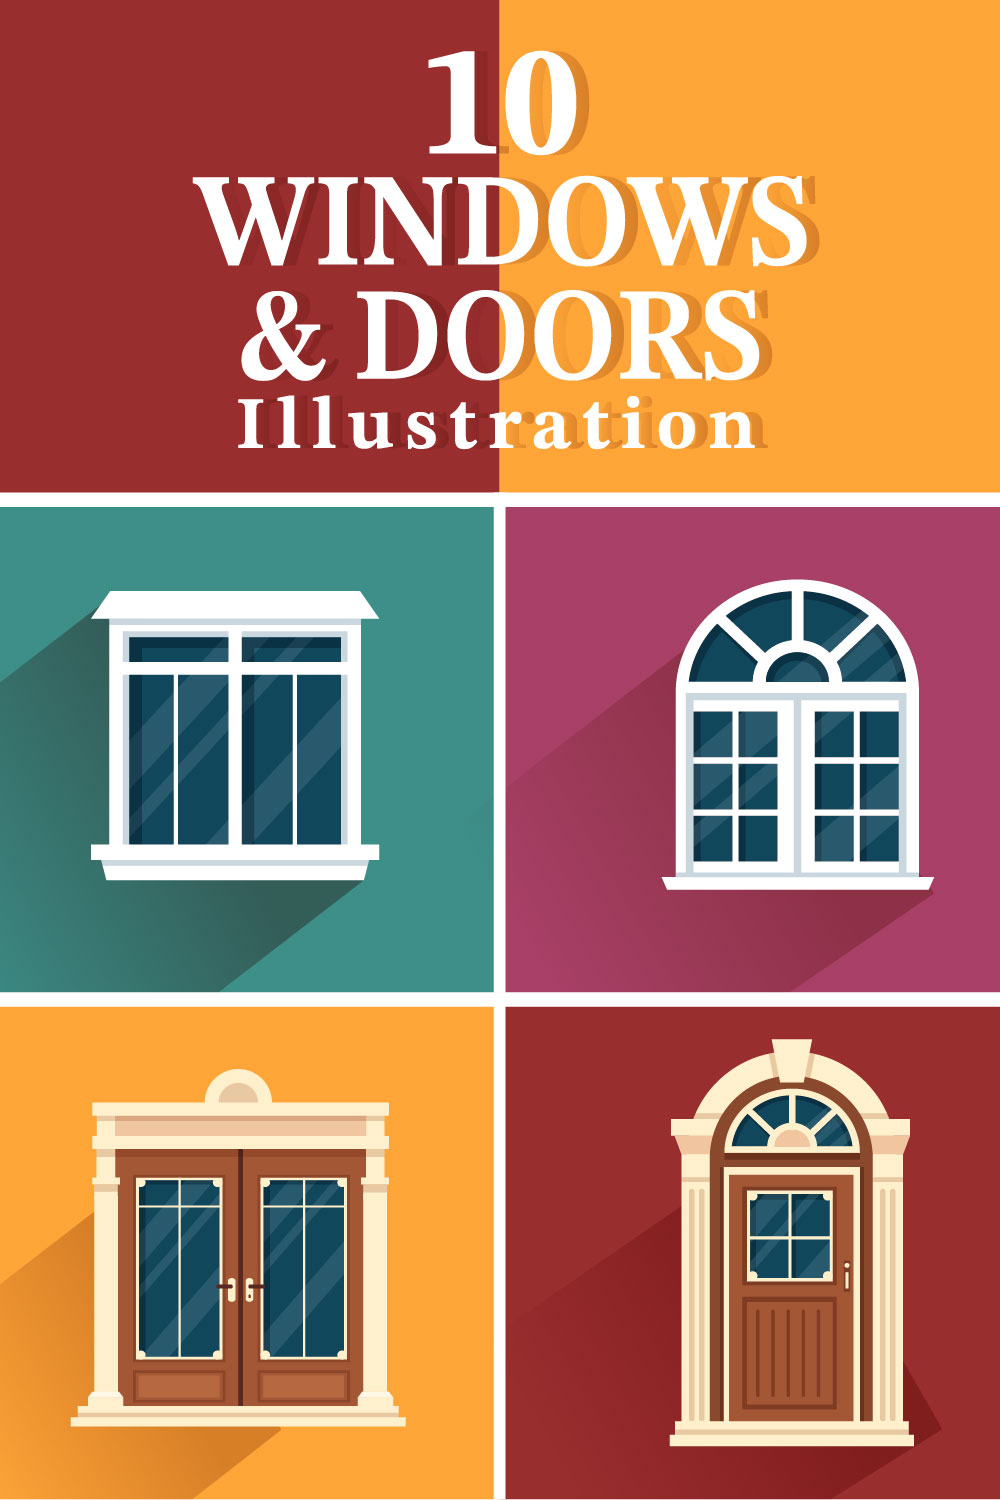 Doors and Windows Design Illustration pinterest image.